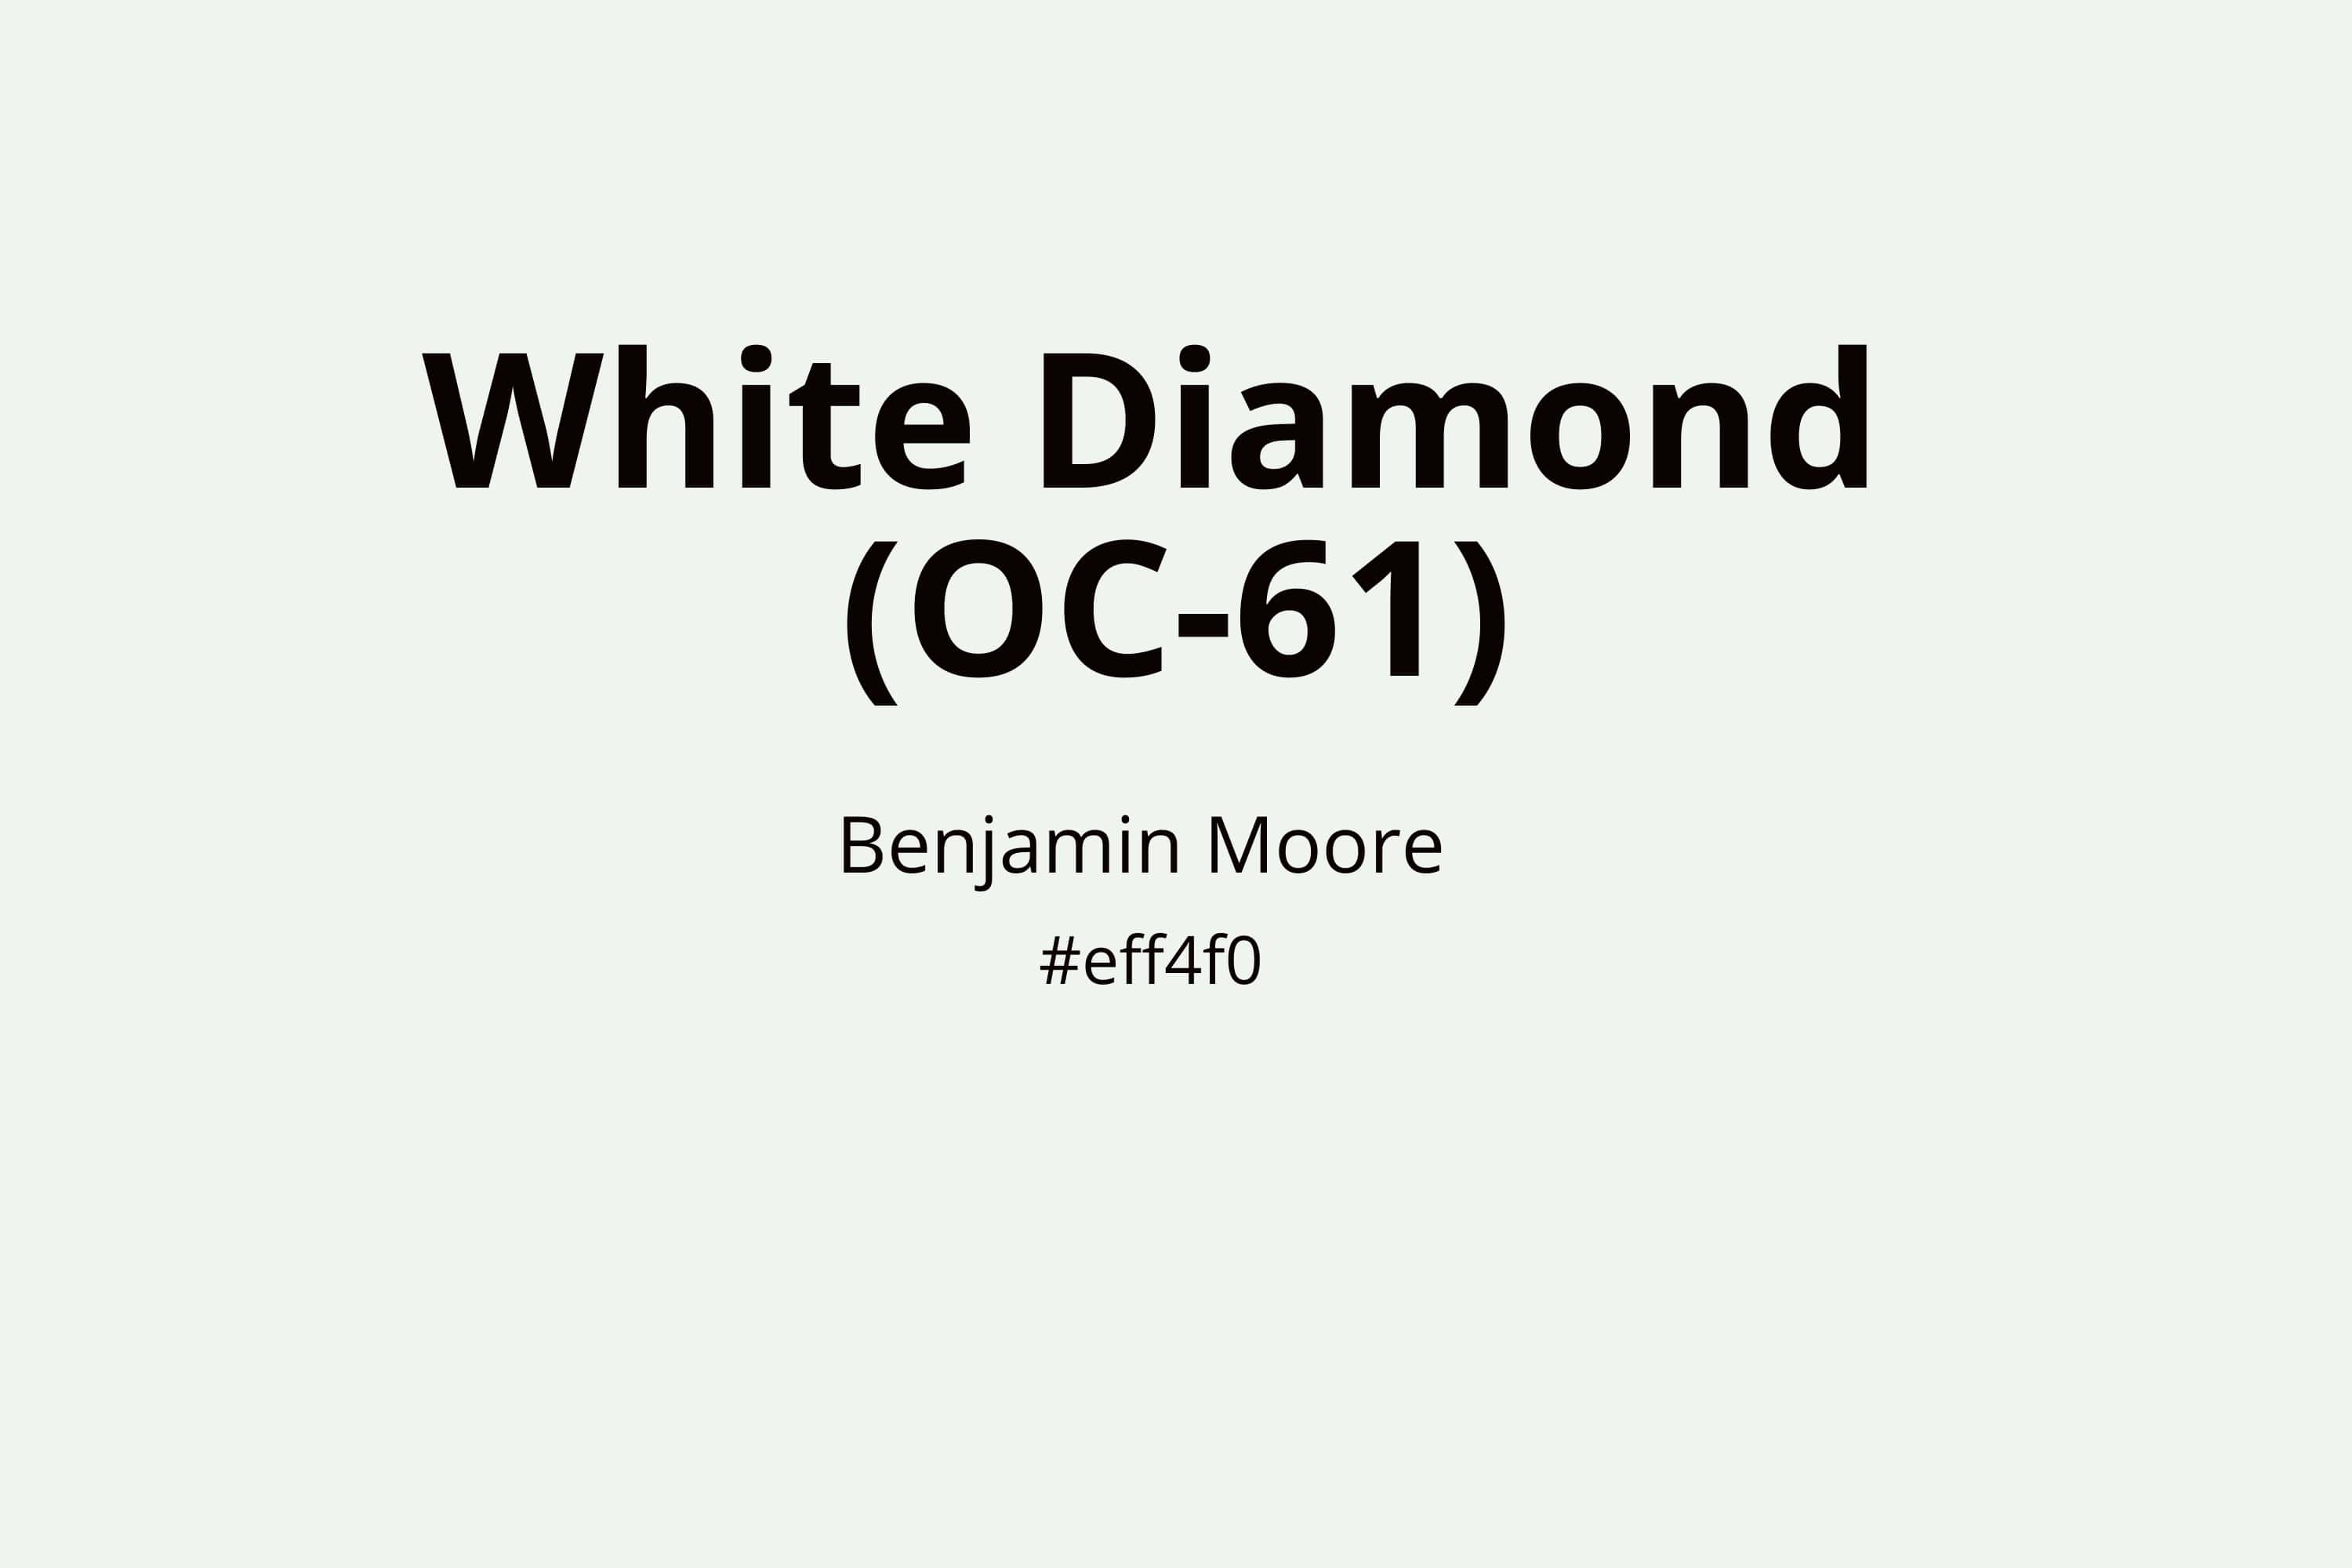 Benjamin Moore White Diamond (OC 61)